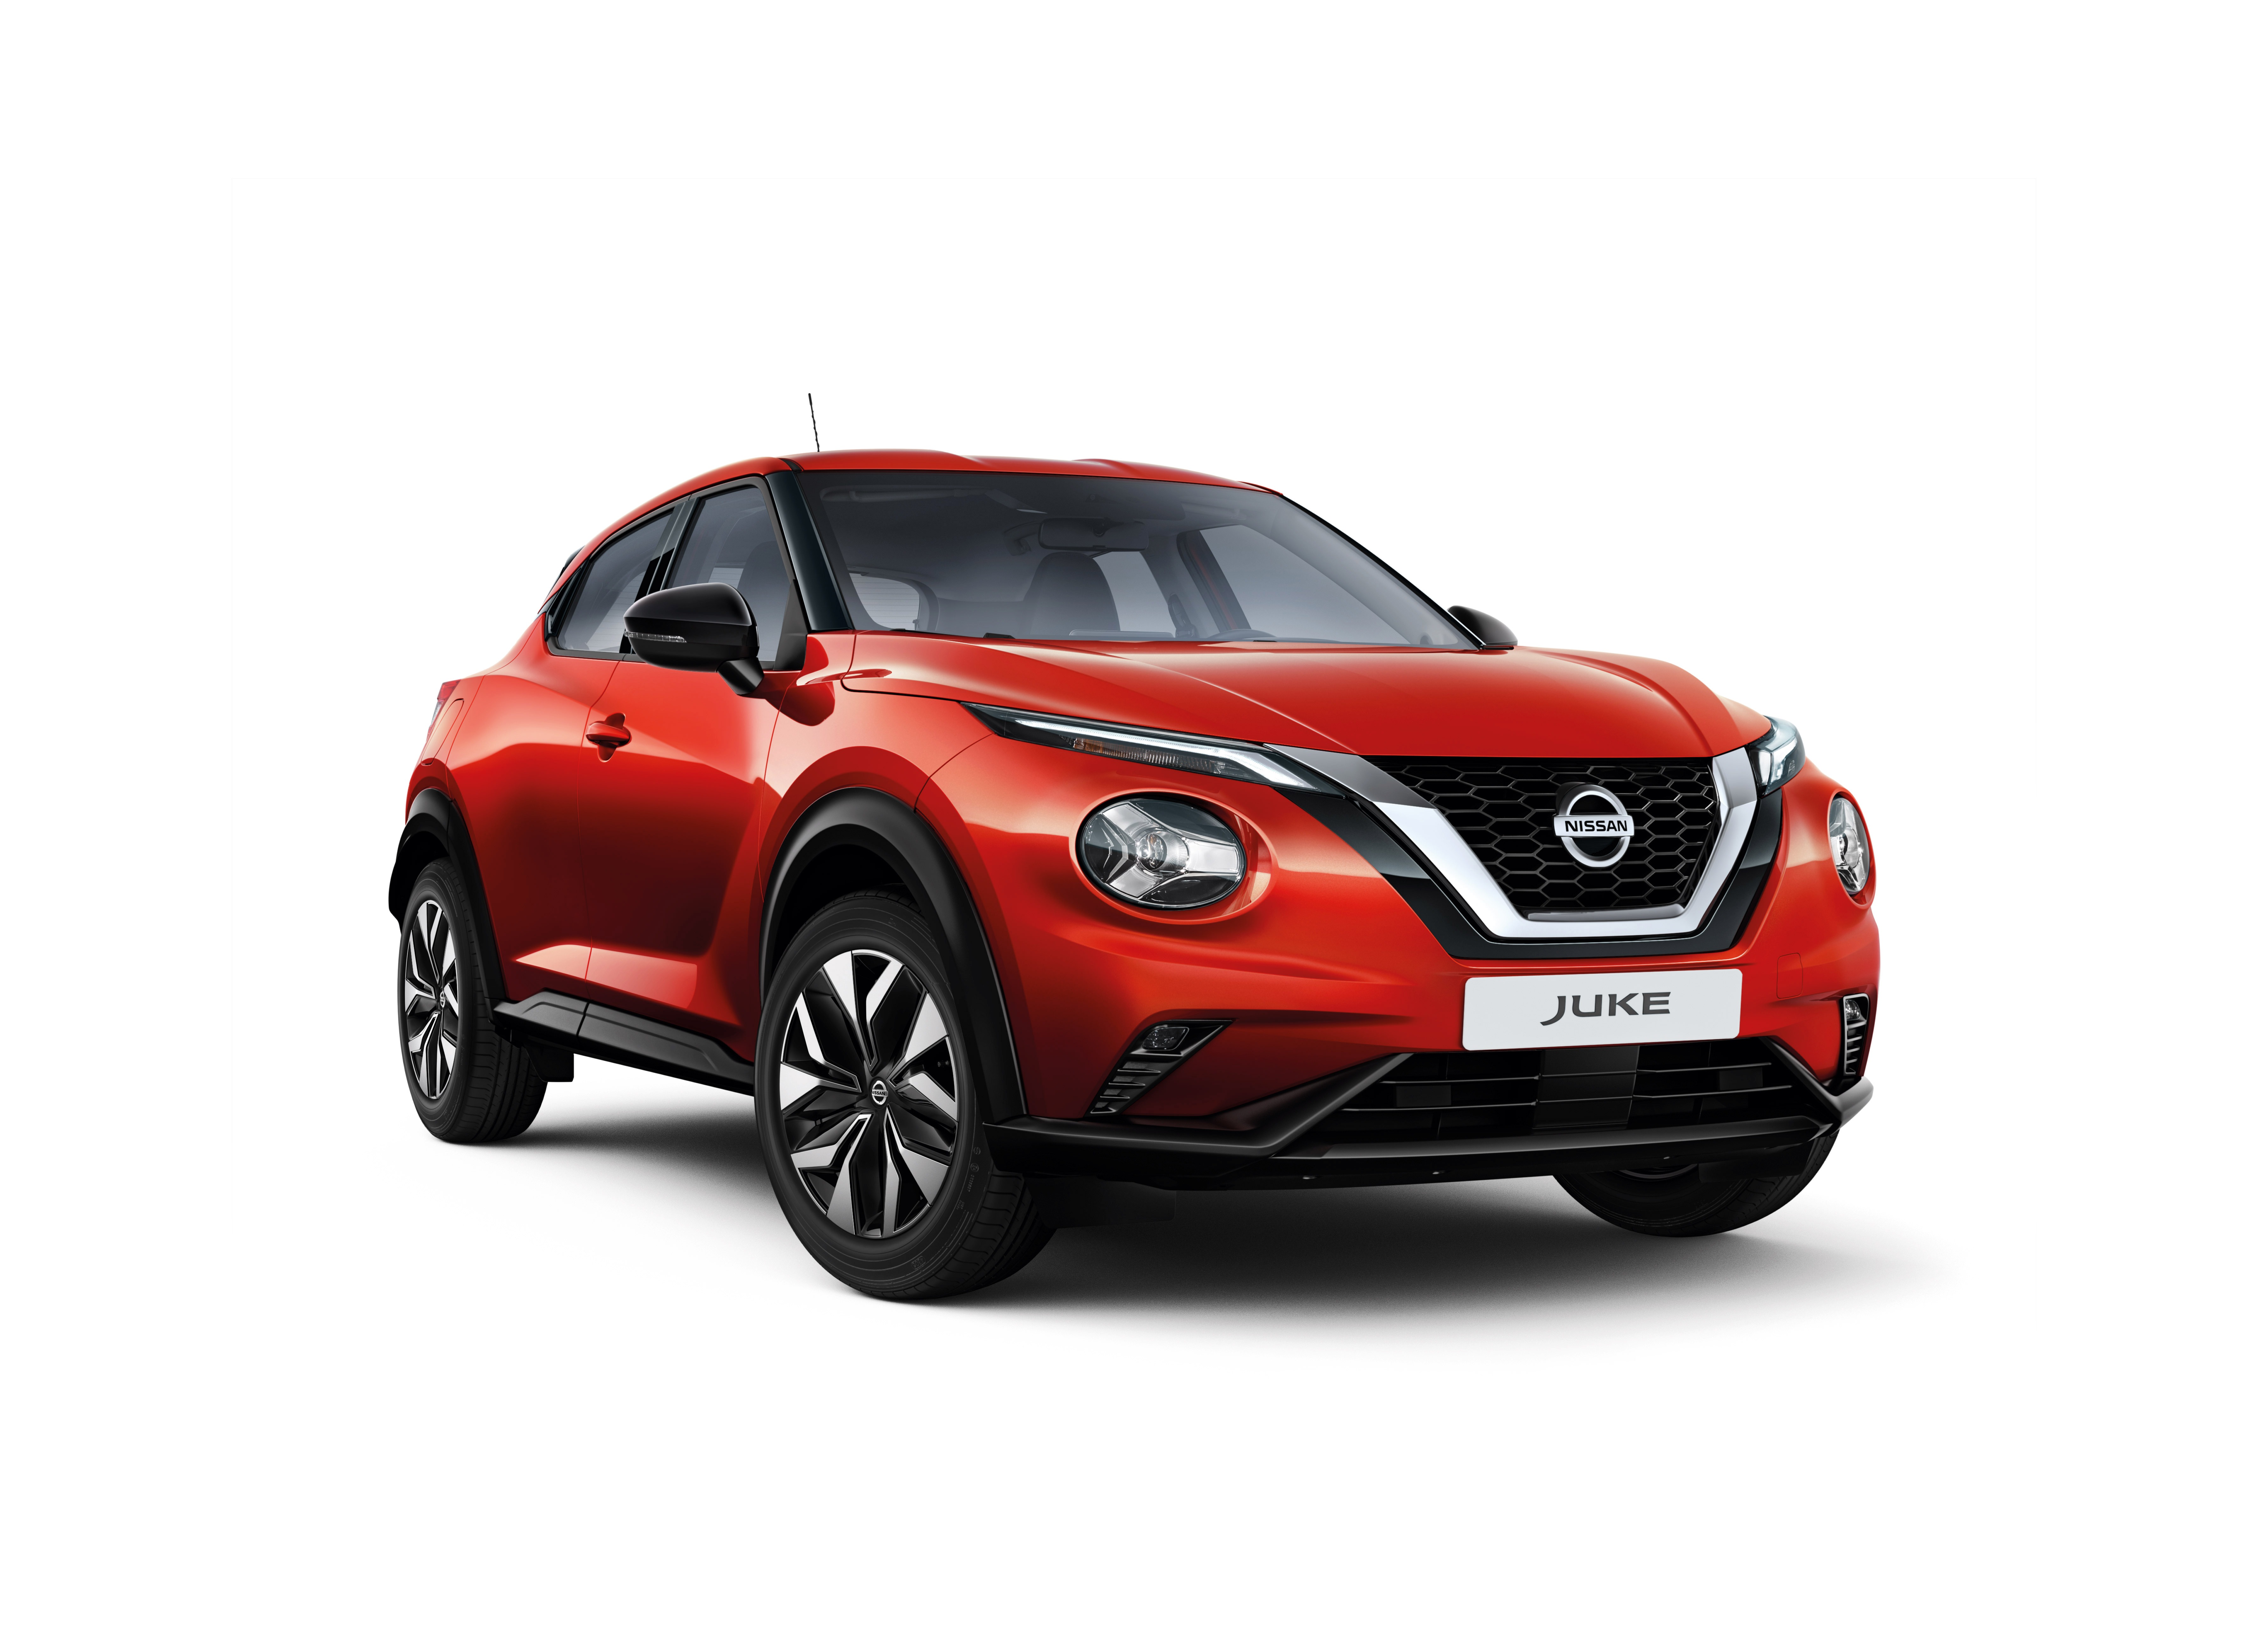 Nissan JUKE – the secret weapon for “carmonious” journeys